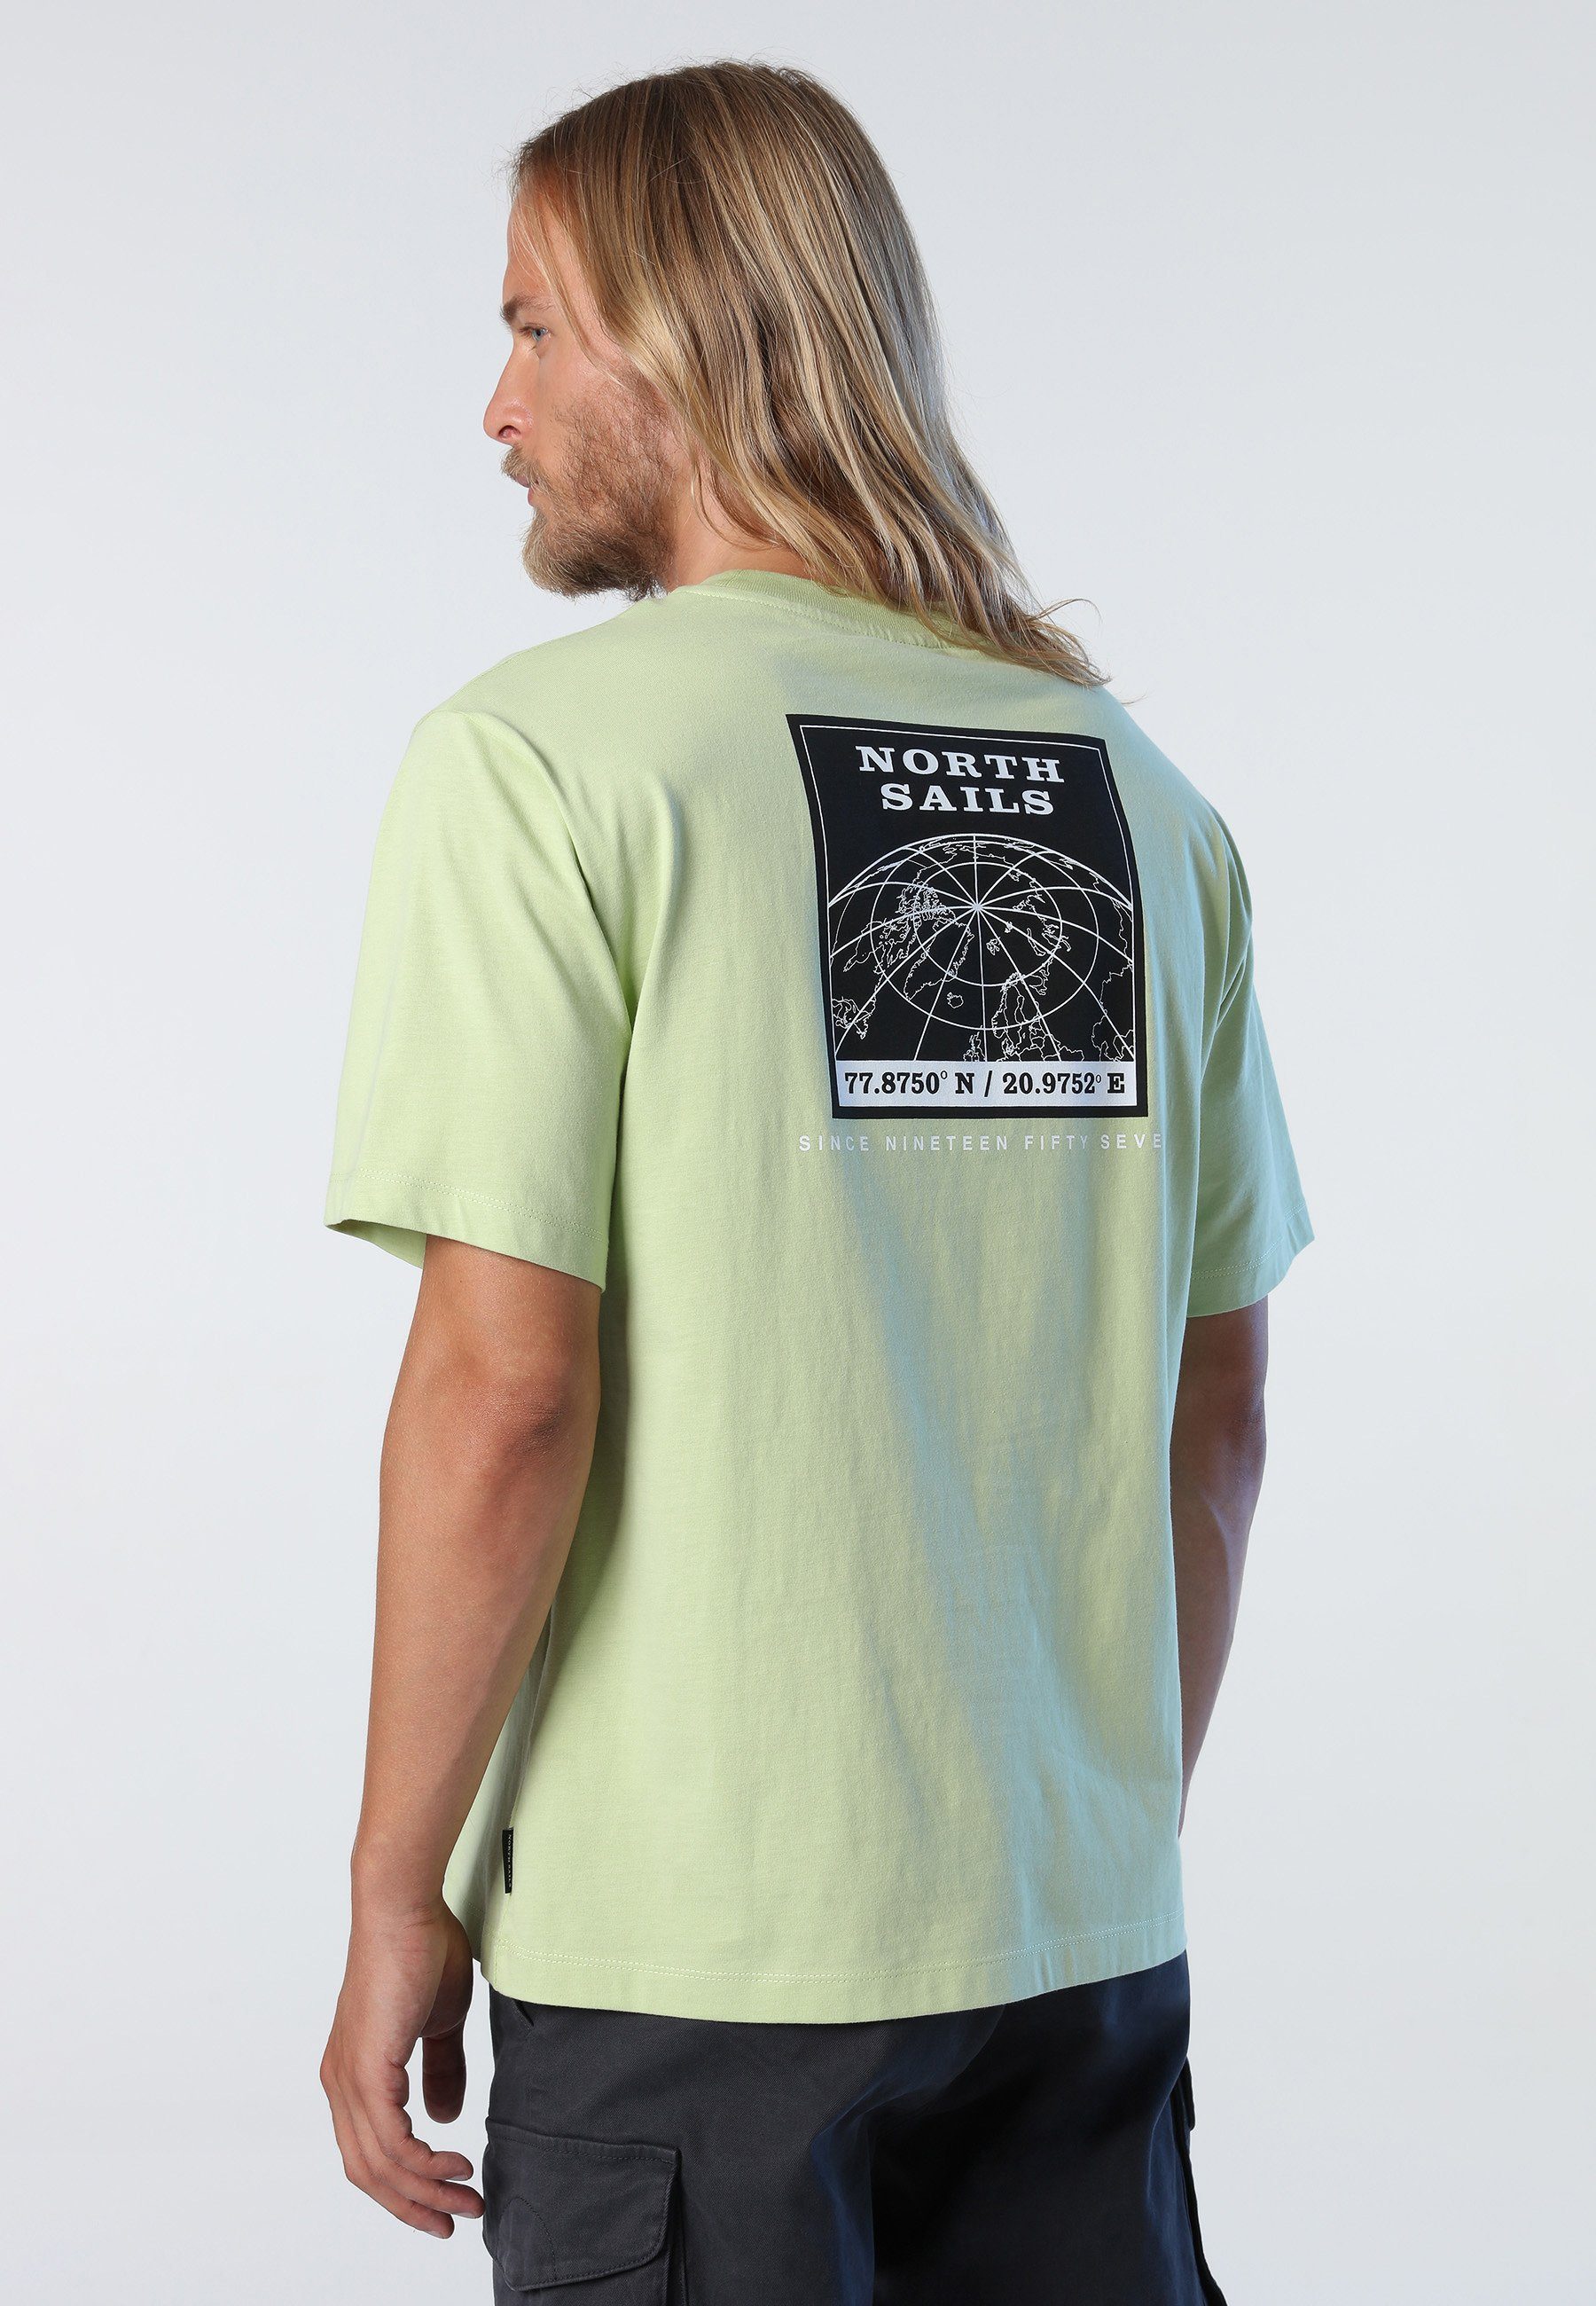 print Sails T-Shirt with T-shirt T-Shirt ASPHALT North graphic